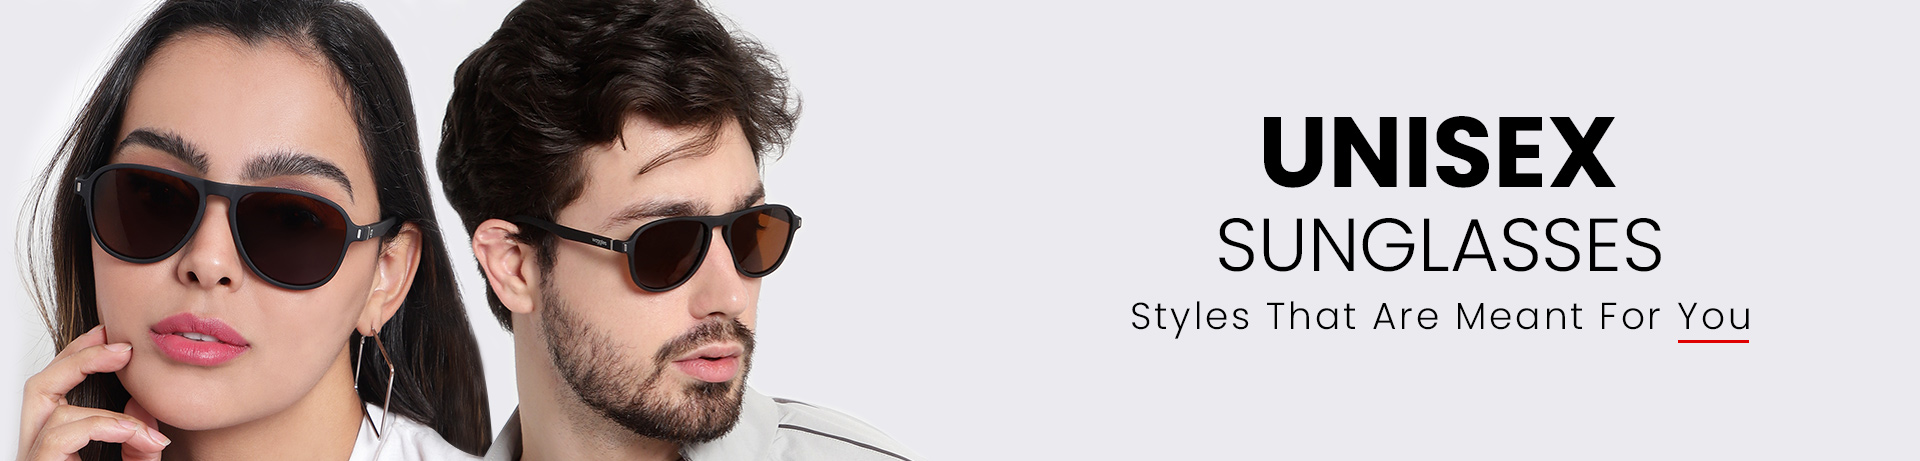 Buy Unisex Sunglasses - 2 Sunglasses @999 - Woggles